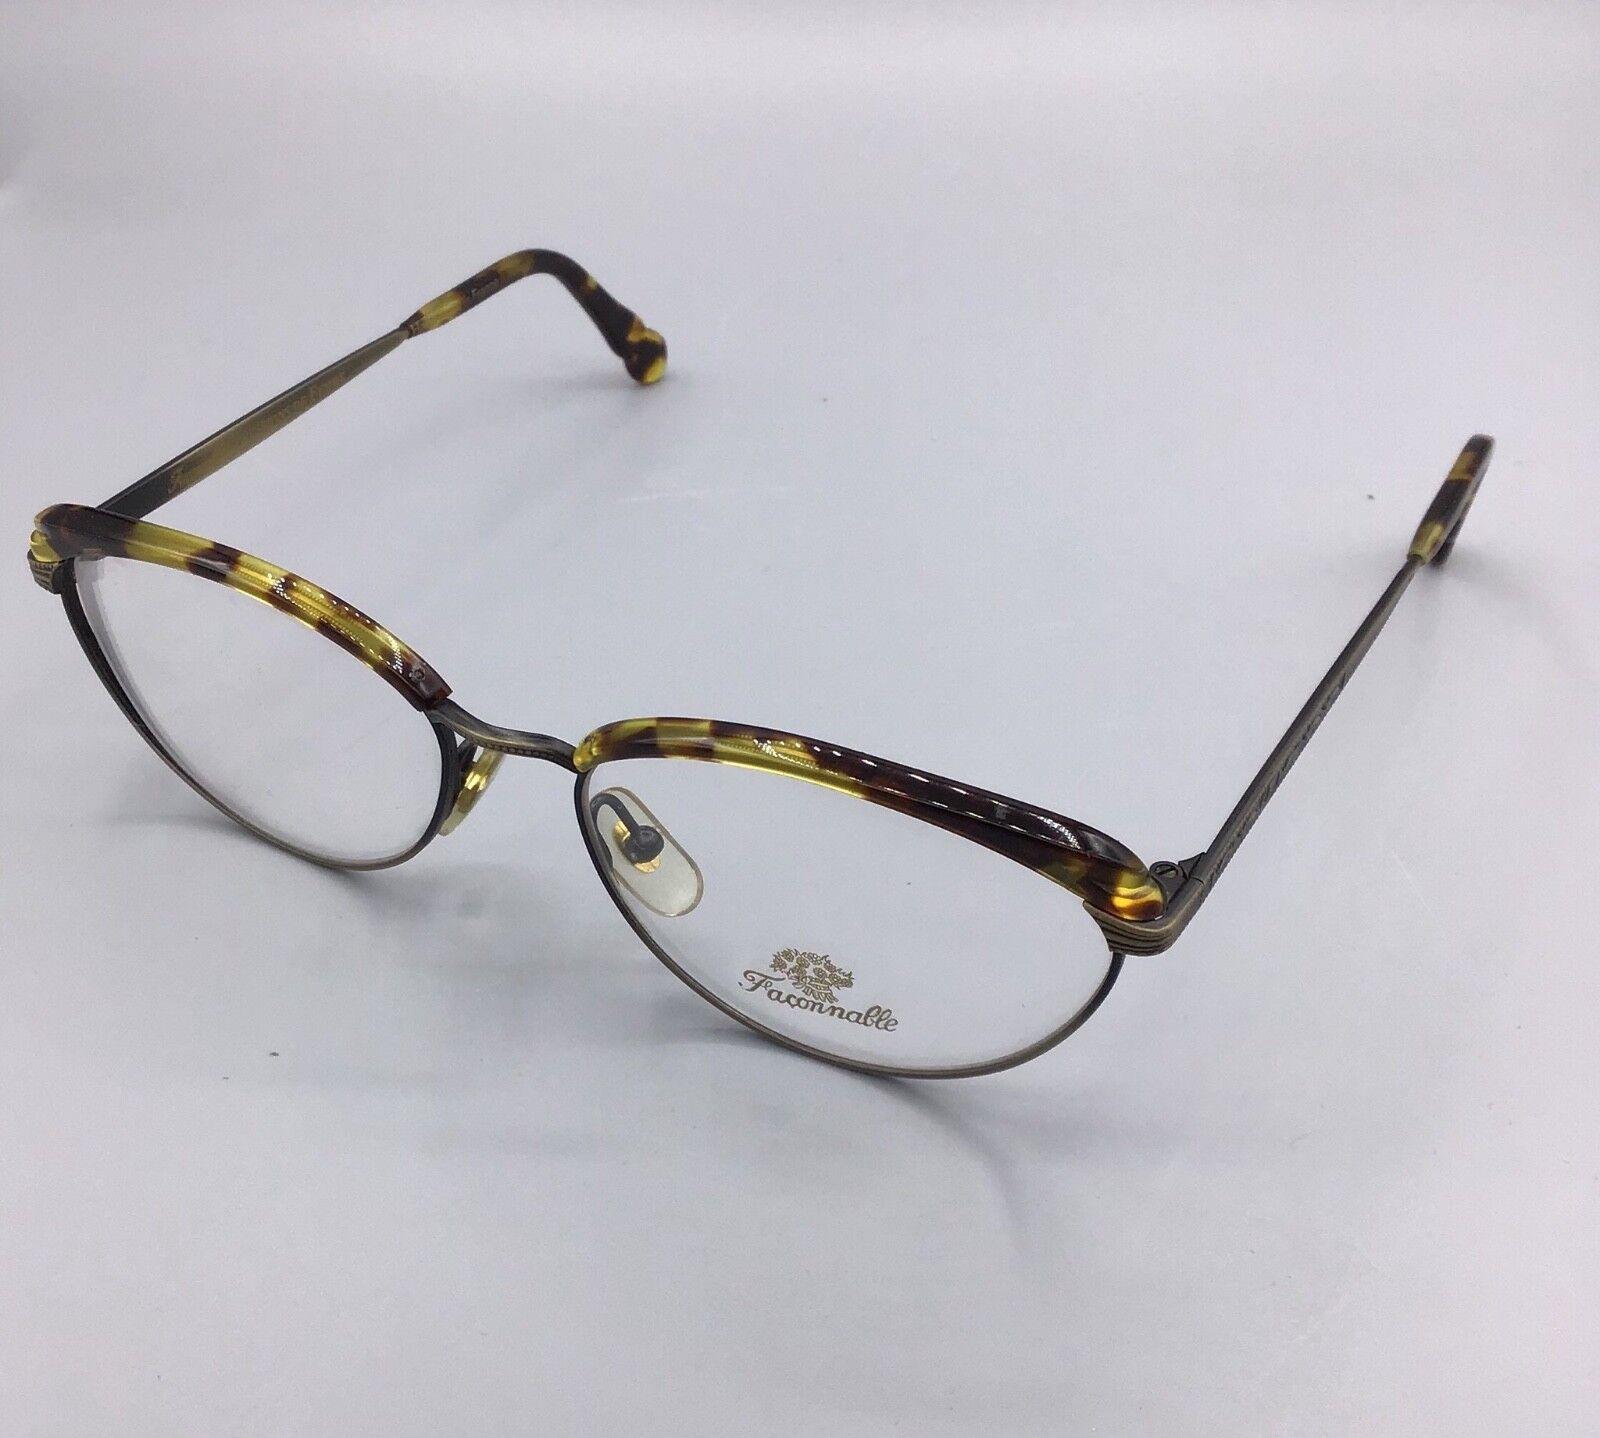 Faconnable occhiale vintage castille Eyewear brillen lunettes